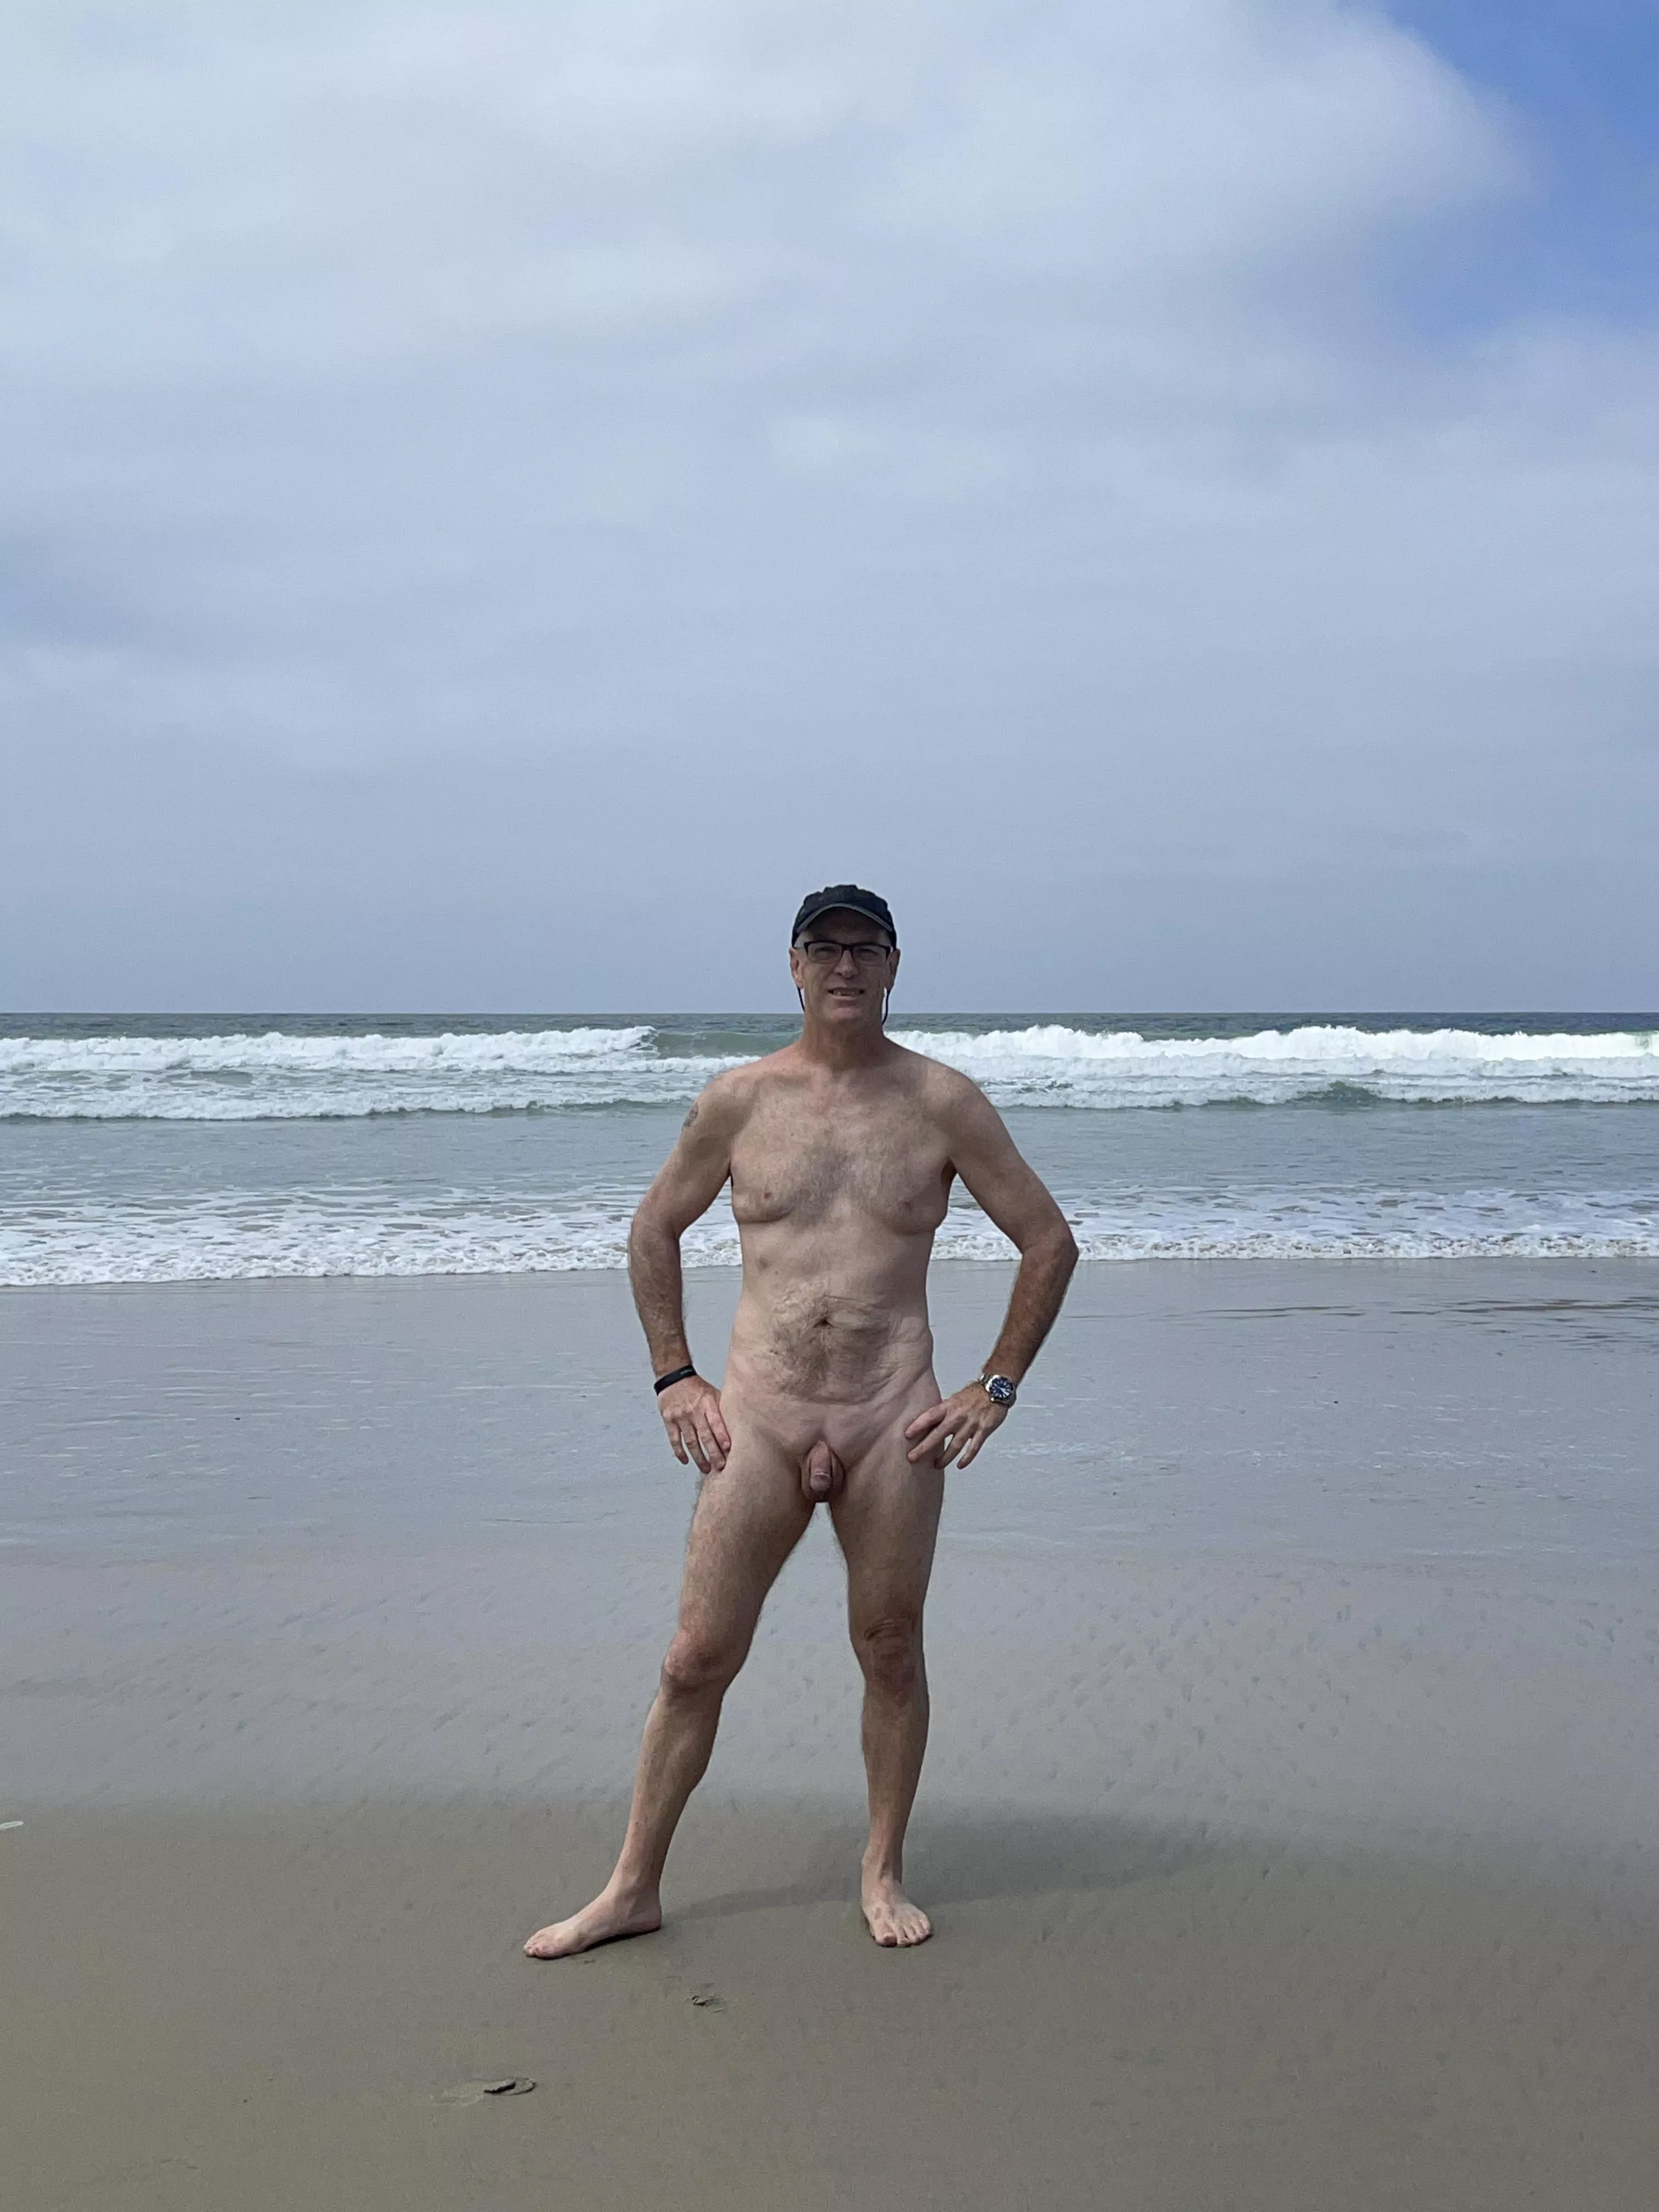 creampie fun on the beach hot porn